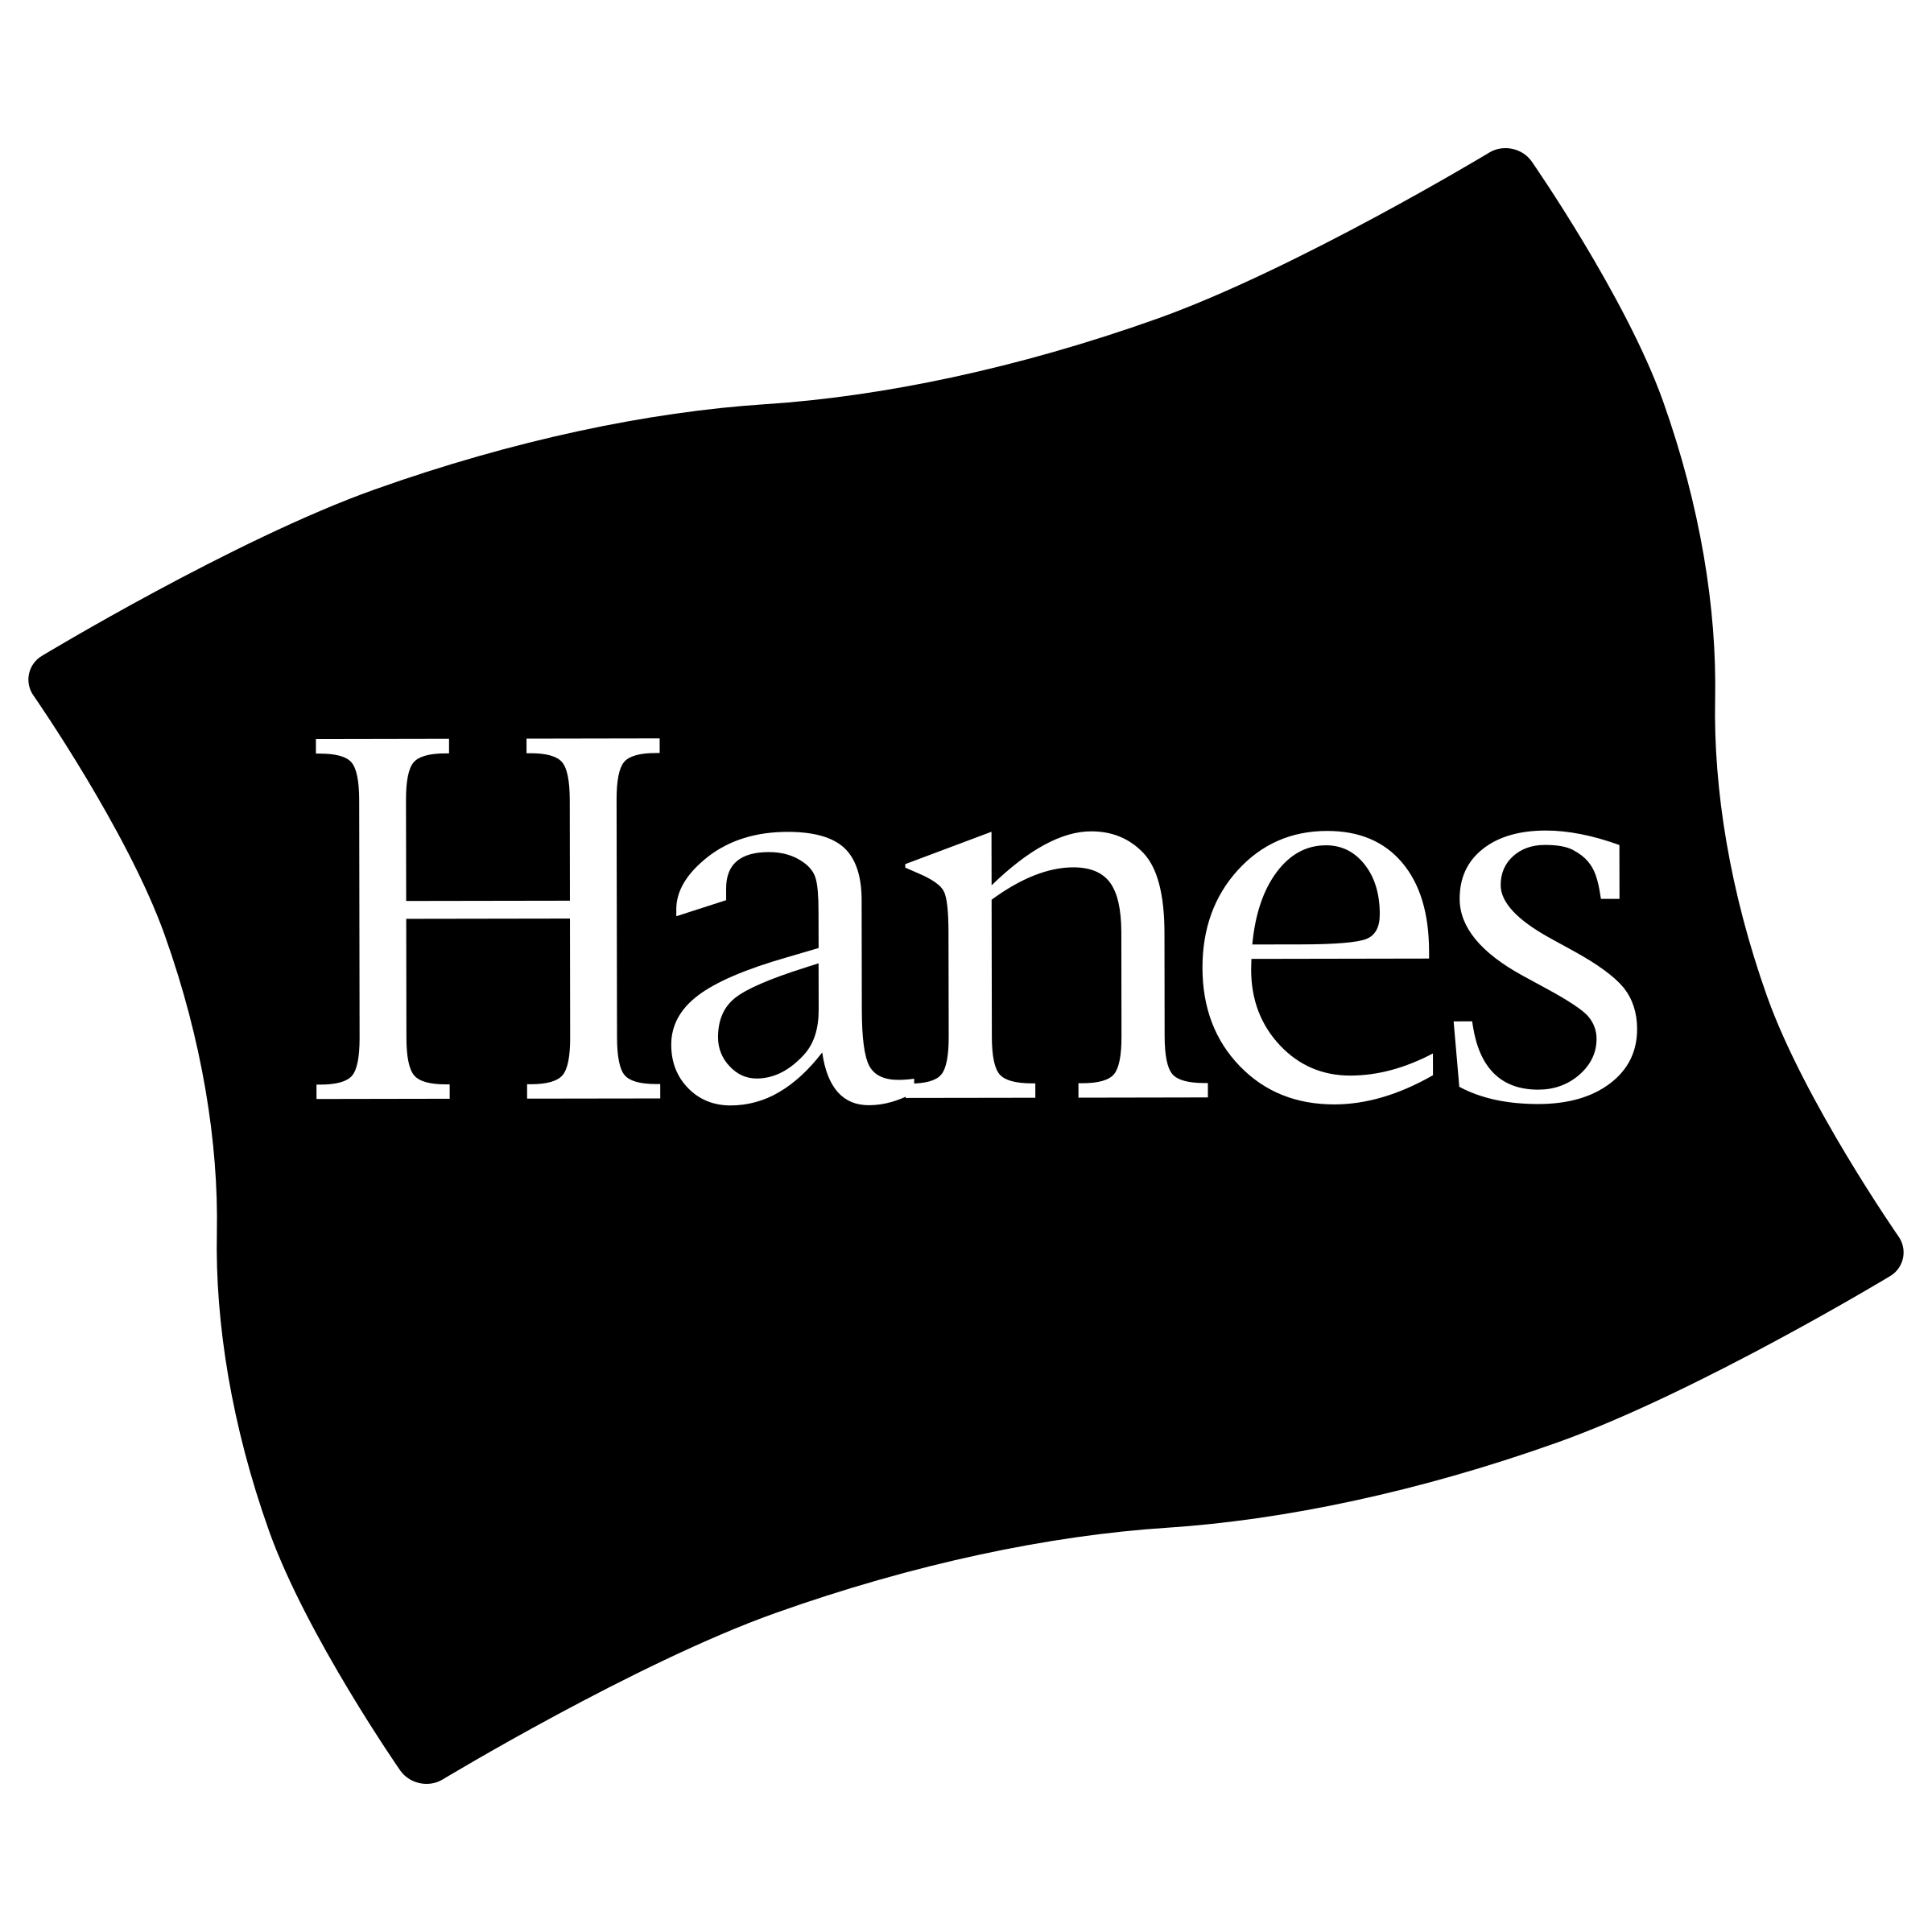 Hanes Logo - Hanes Logo PNG Transparent & SVG Vector - Freebie Supply